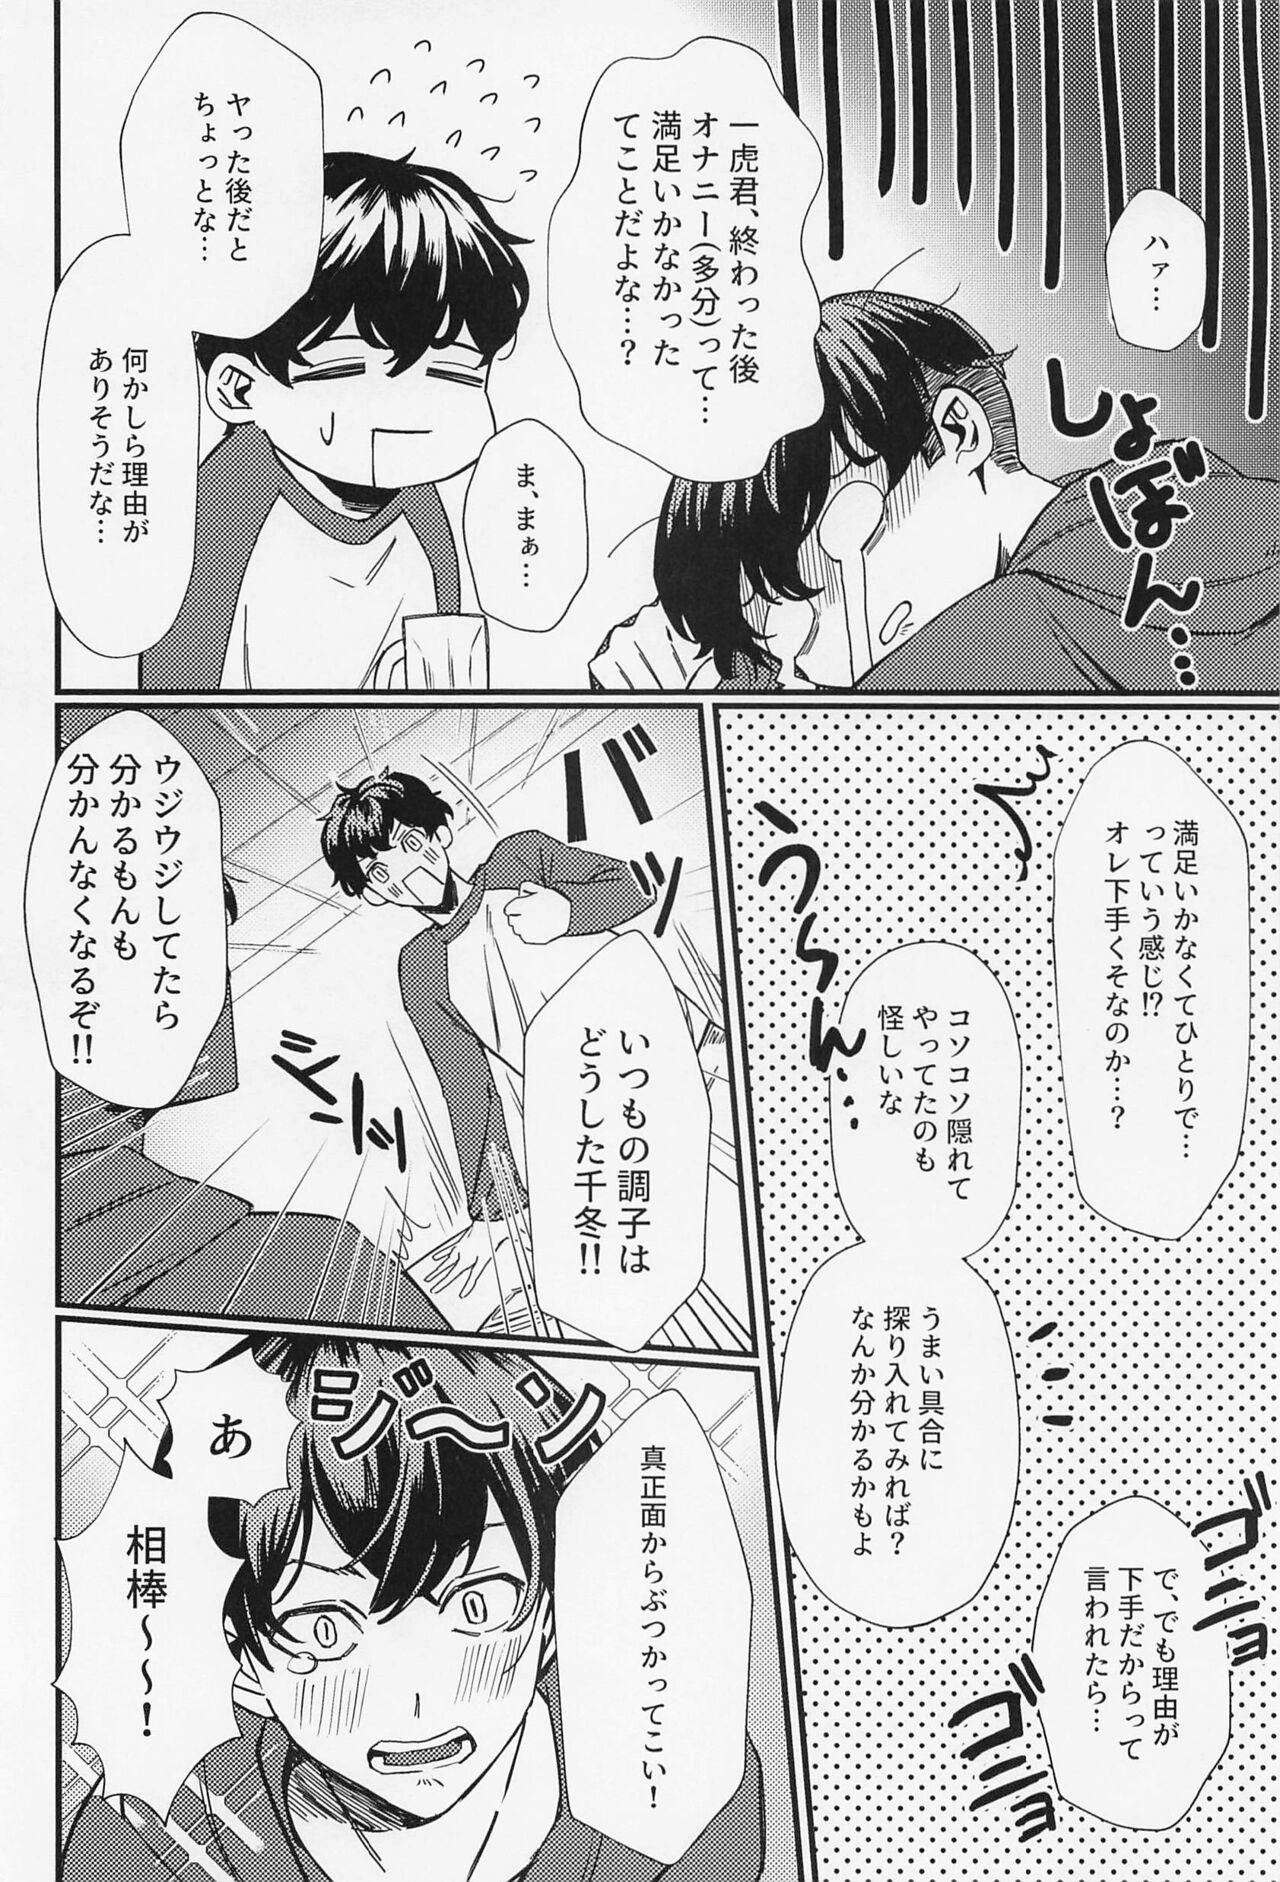 Delicia orettemoshikashite・・・hetakusonano！？ - Tokyo revengers Tribbing - Page 9